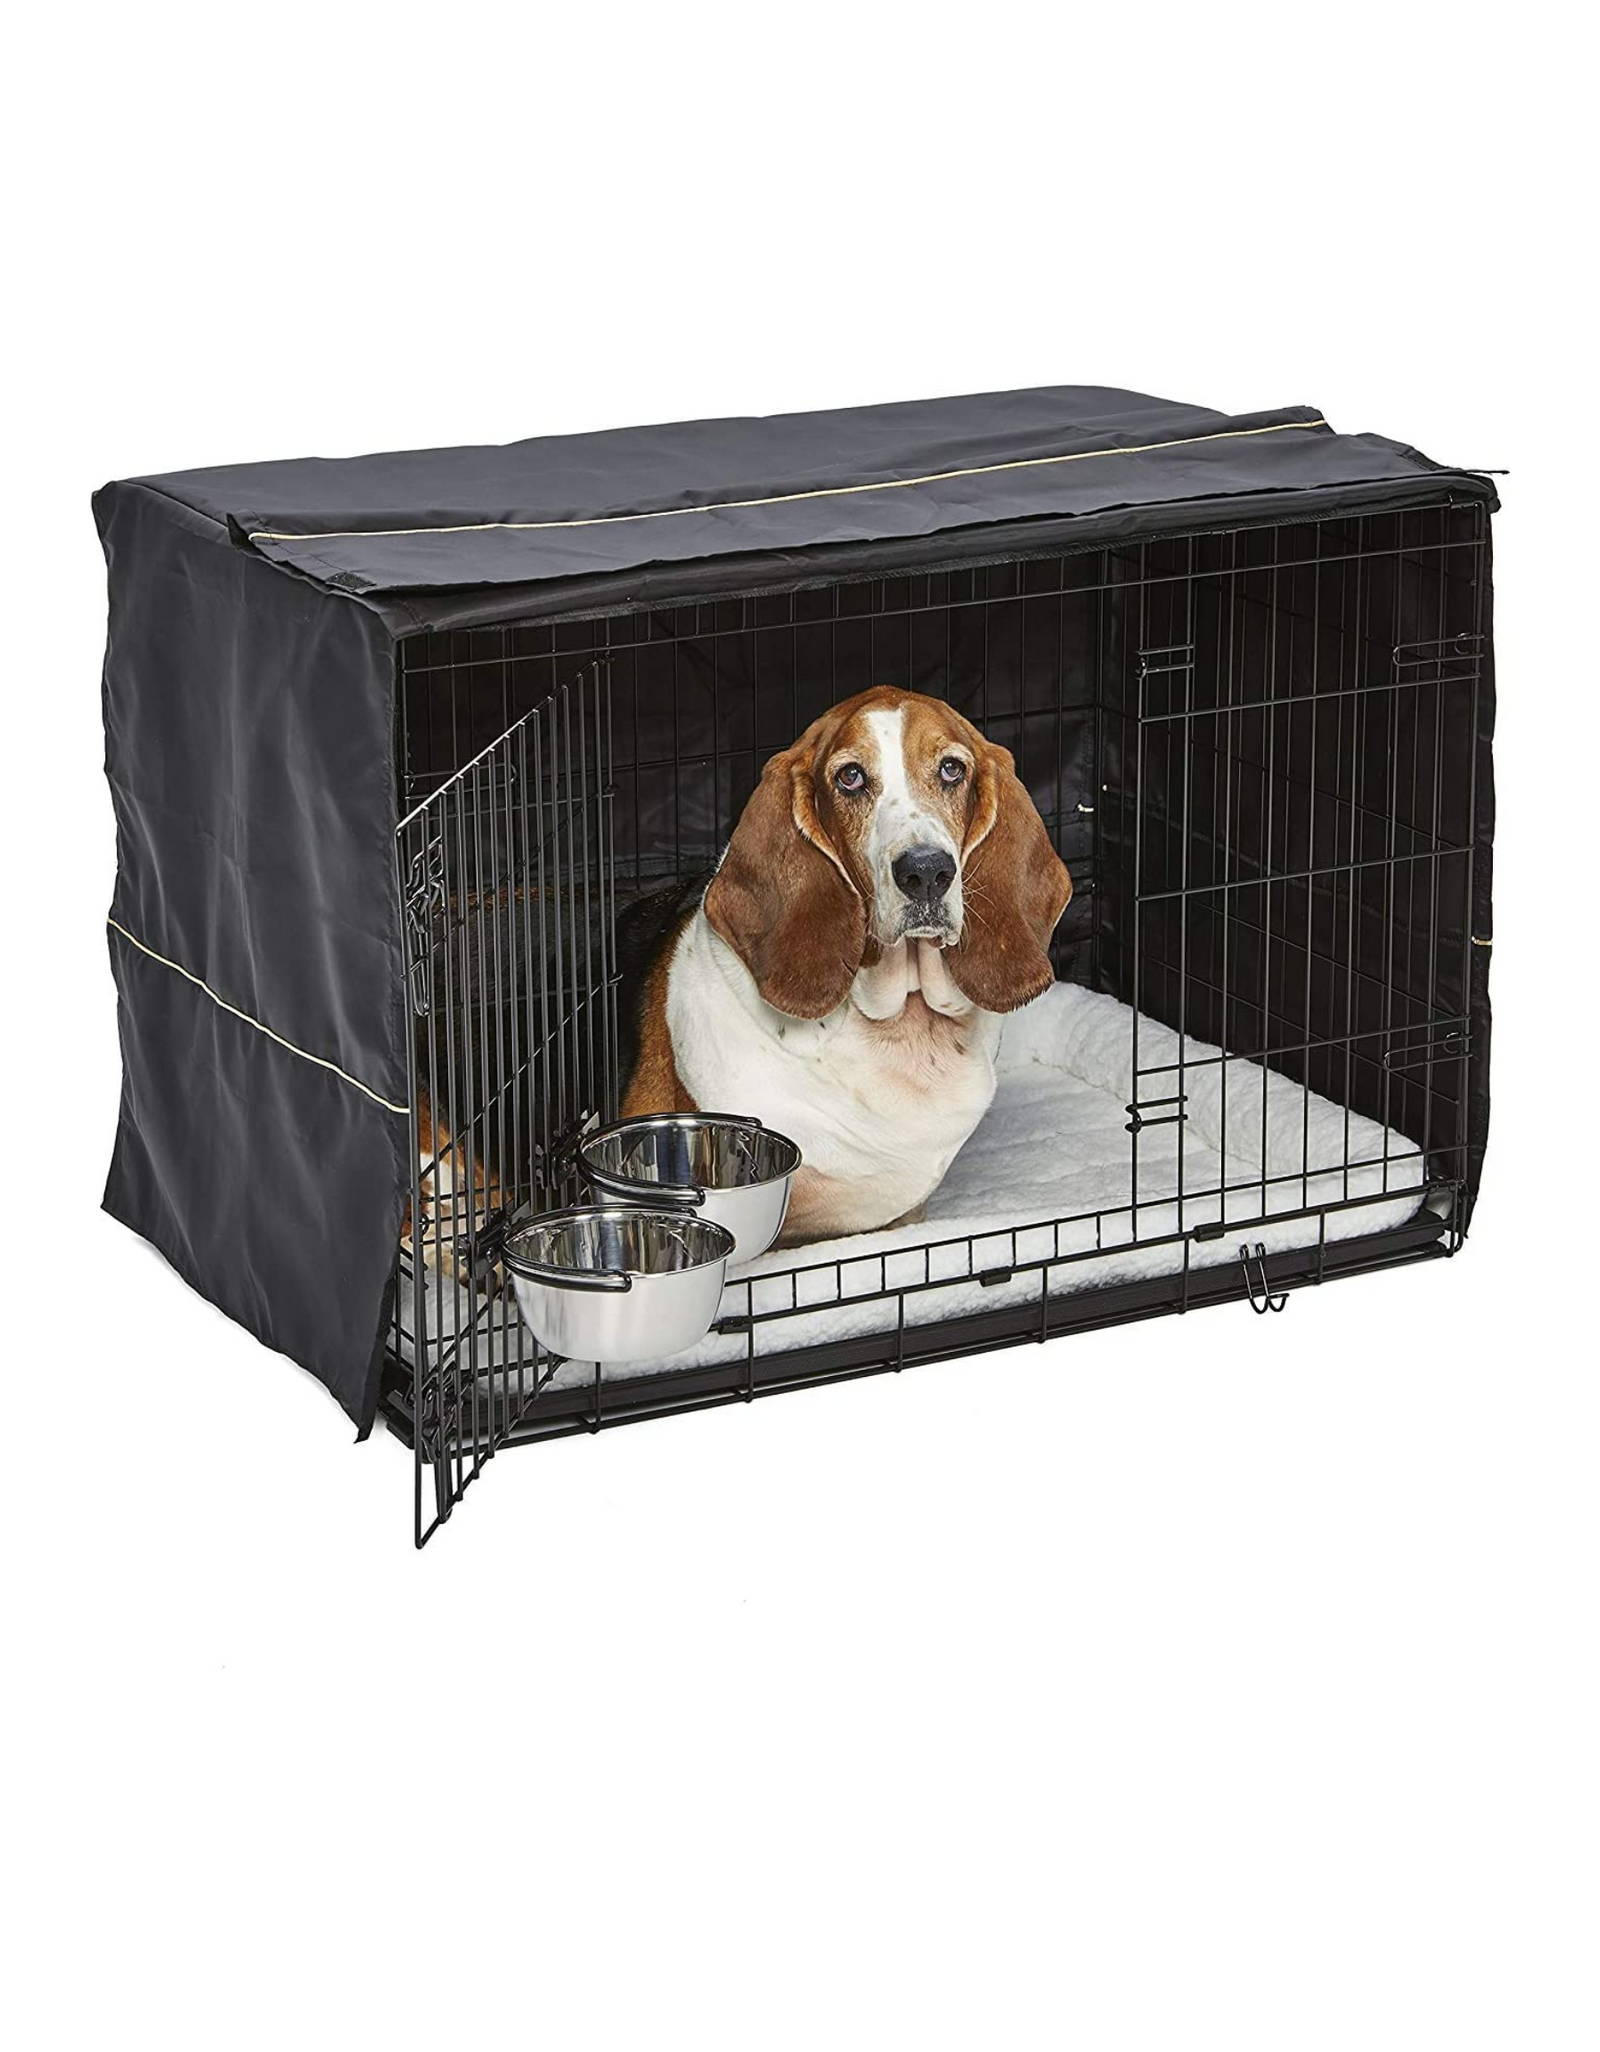 iCrate Dog Crate Starter Kit 36 Inch, Ideal for Medium/Large Dog Breeds, Black